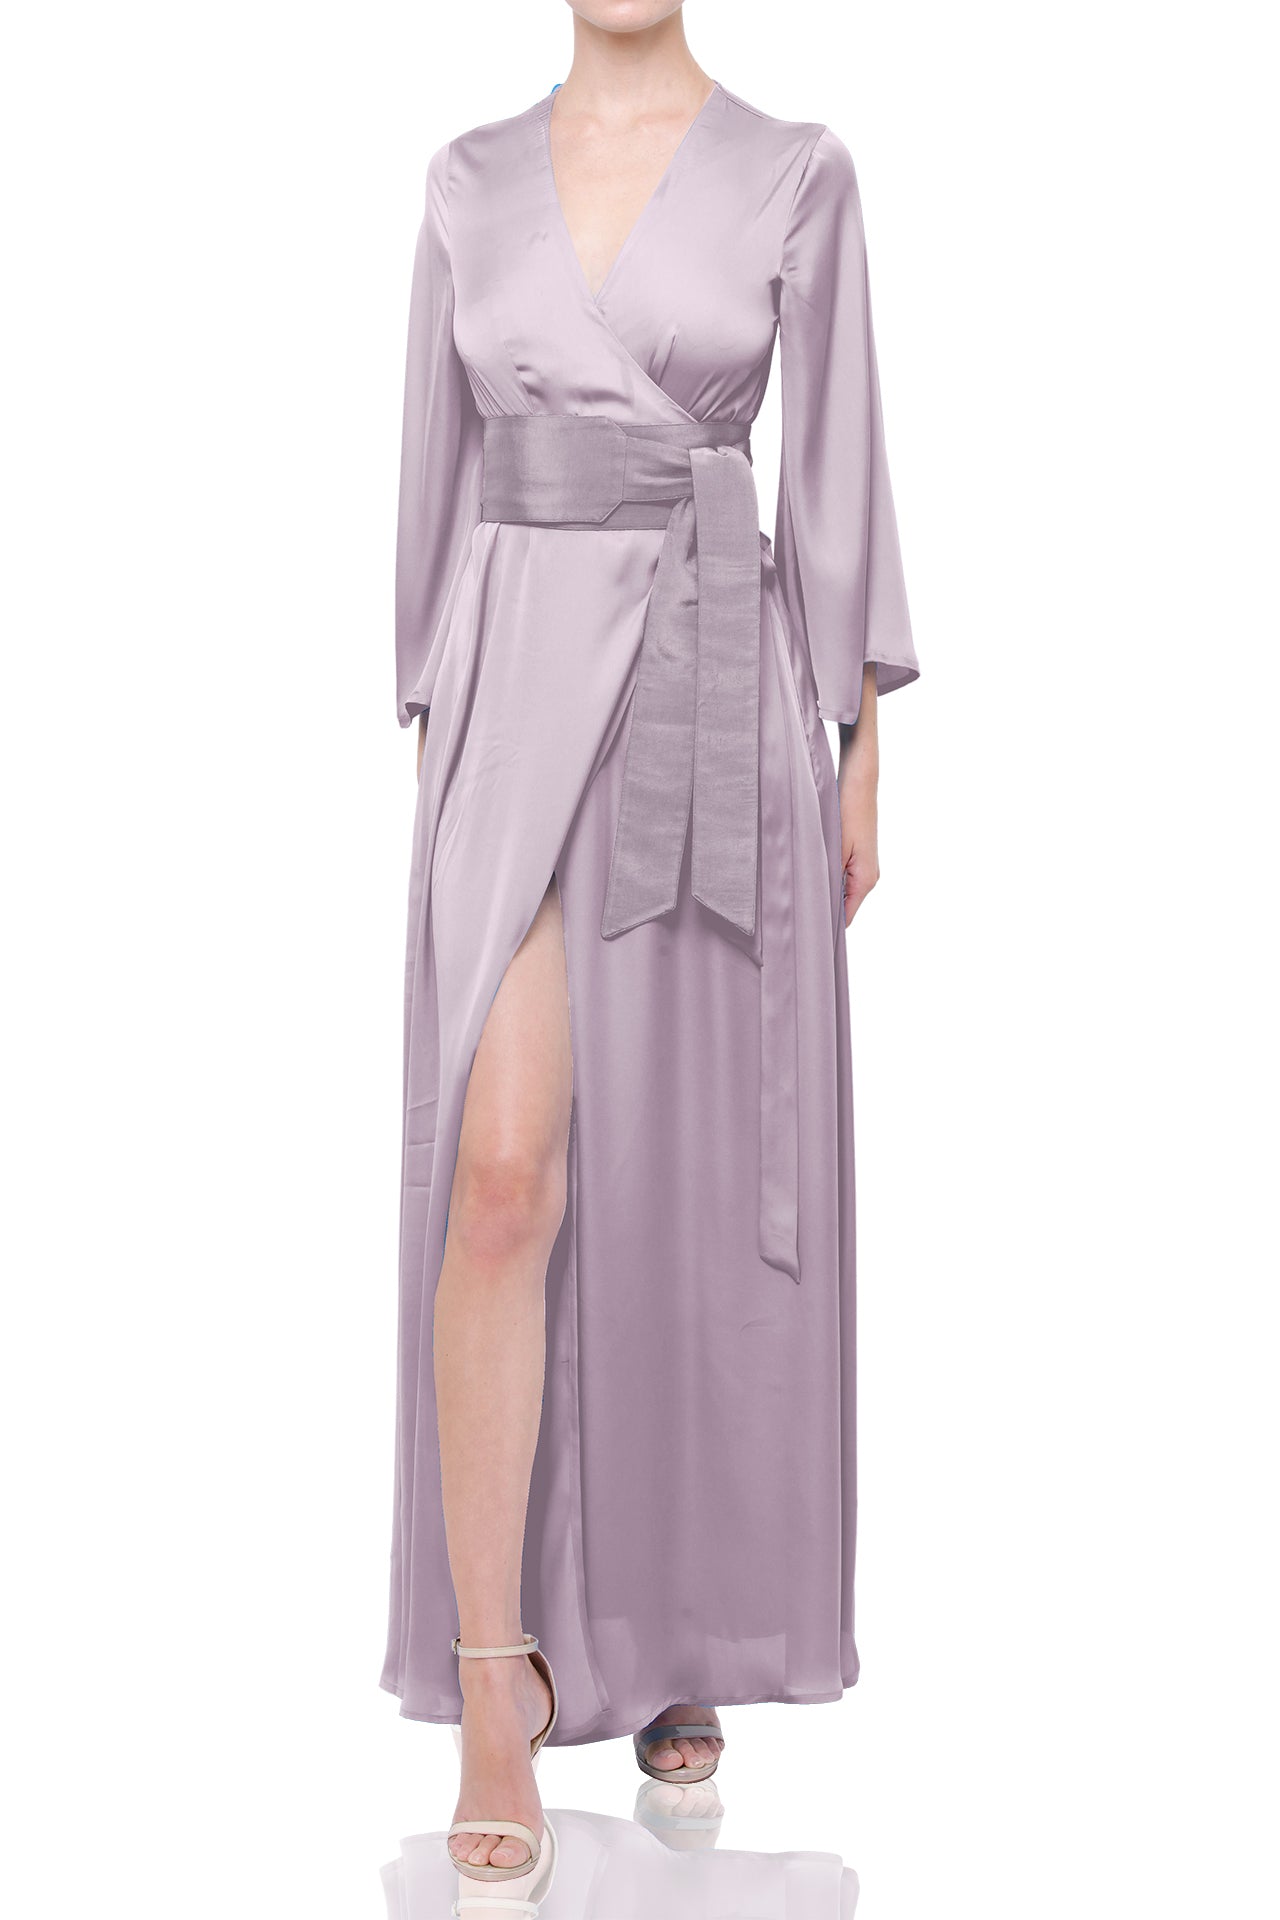 Bestseller Full Sleeve Maxi Wrap Dress in Pearl Grey